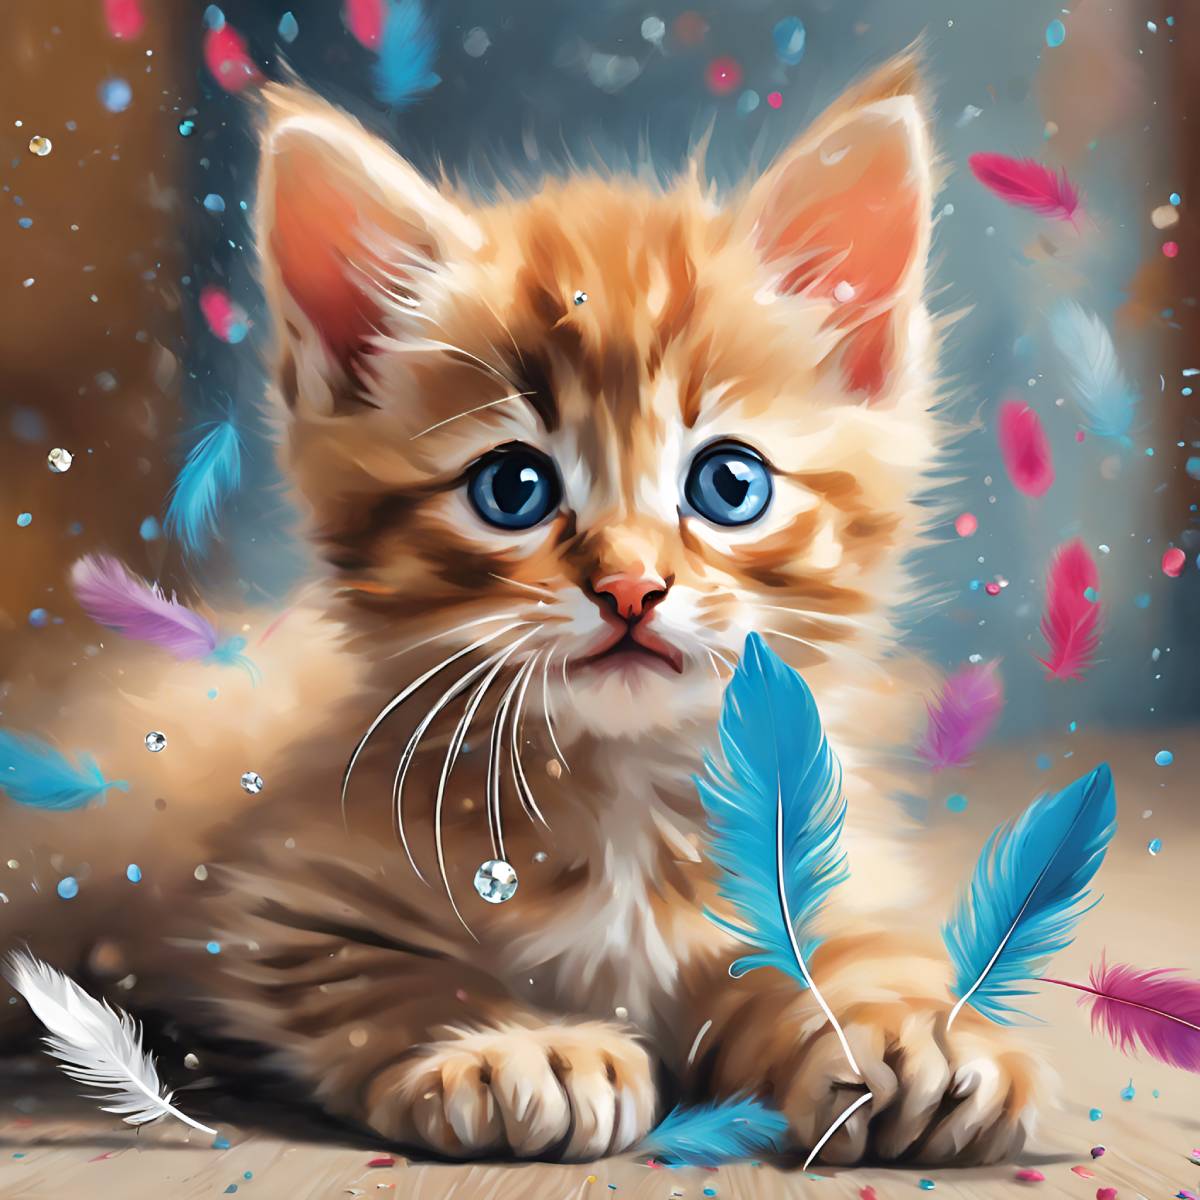 diamants-wizard-diamond-painting-kits-Animaux-Cat-Playful-Kitten-Pounce-original.jpg